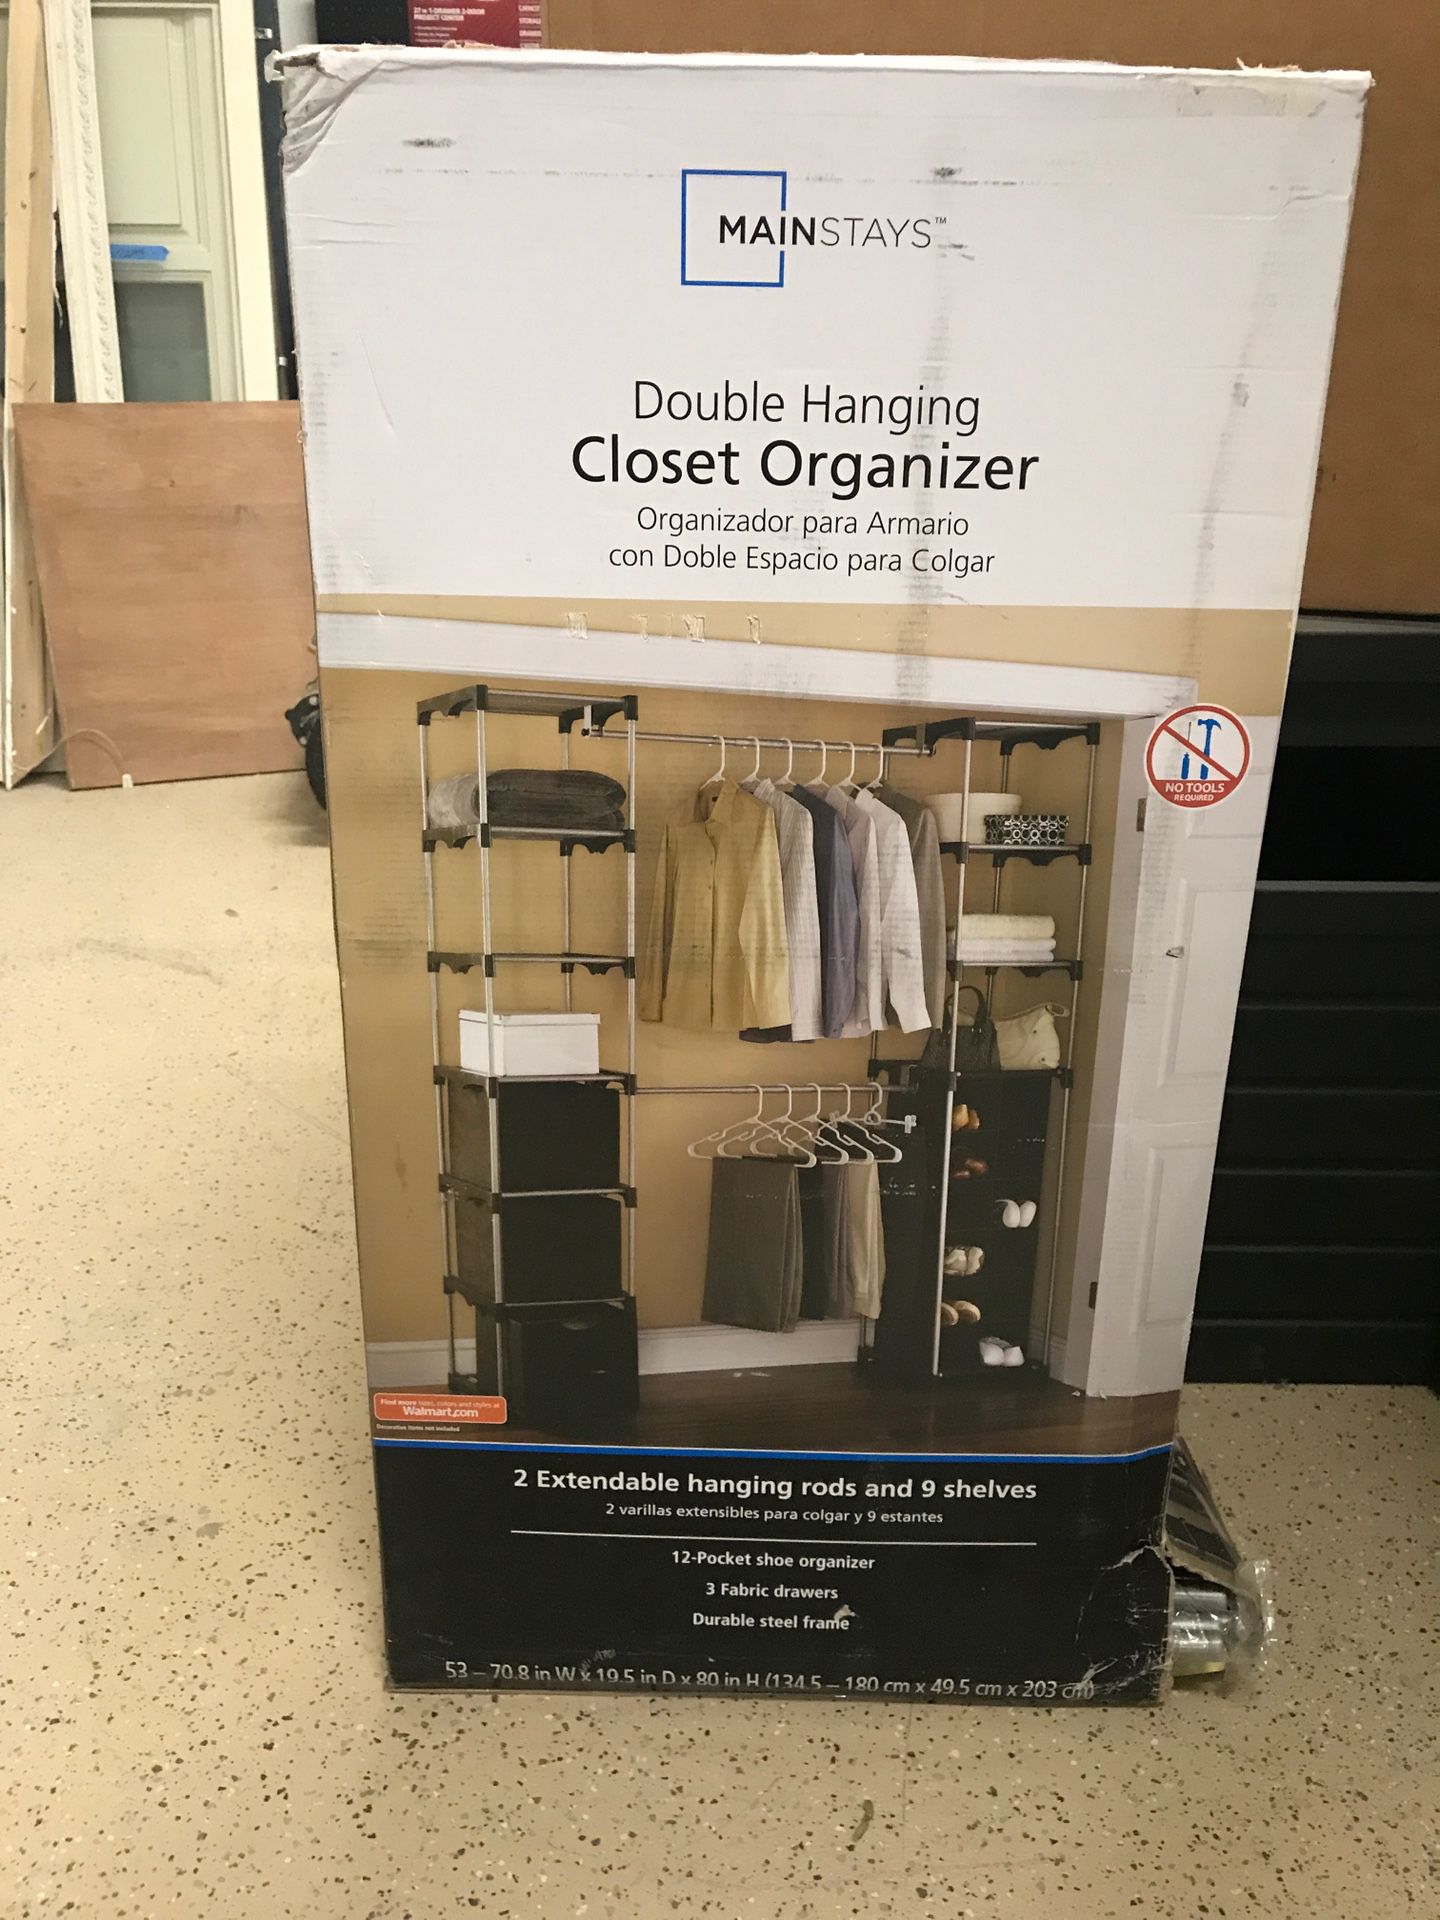 Double hanging closet organizer